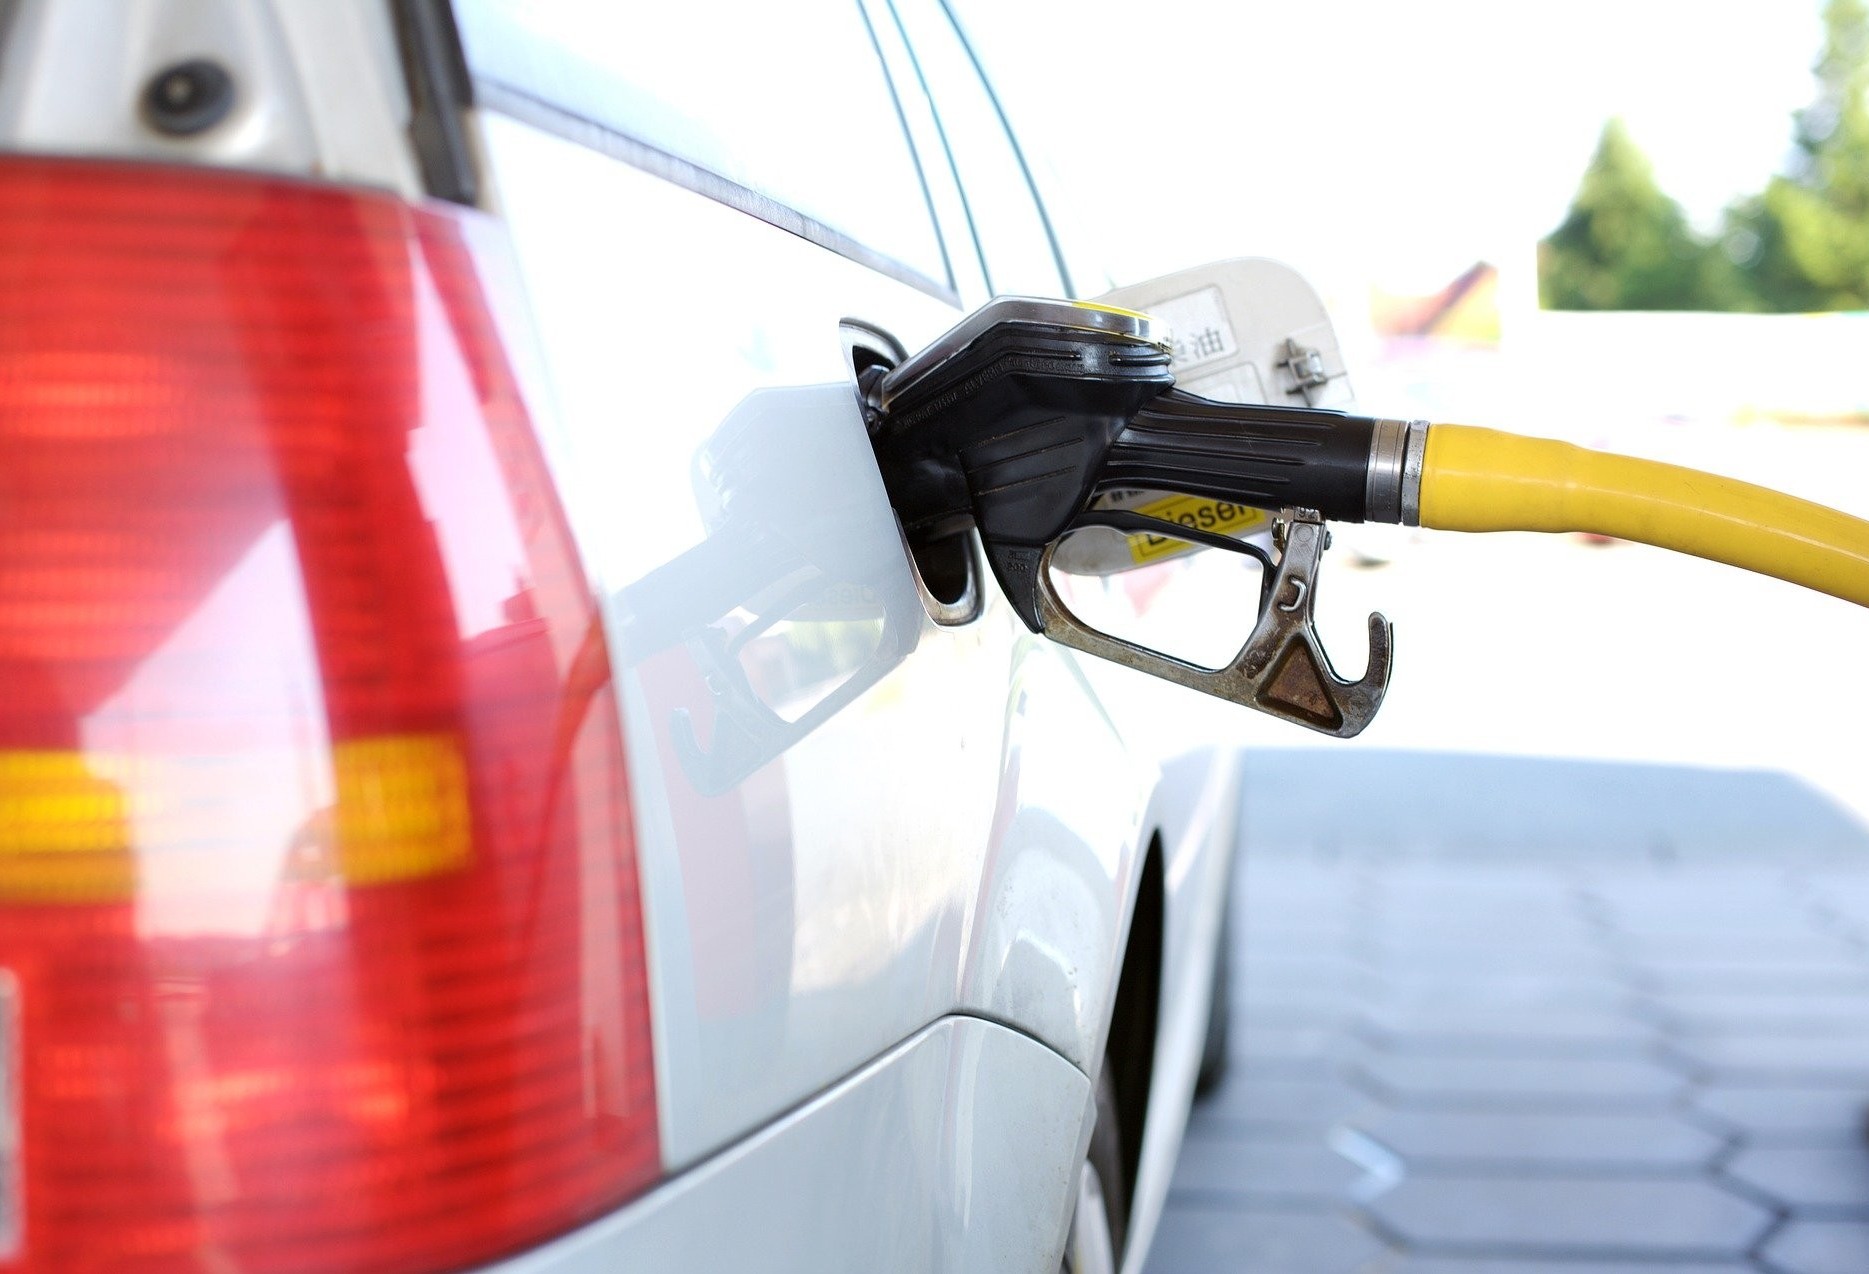 Procon-PR vai notificar postos e distribuidoras por reajuste antecipado nos combustíveis